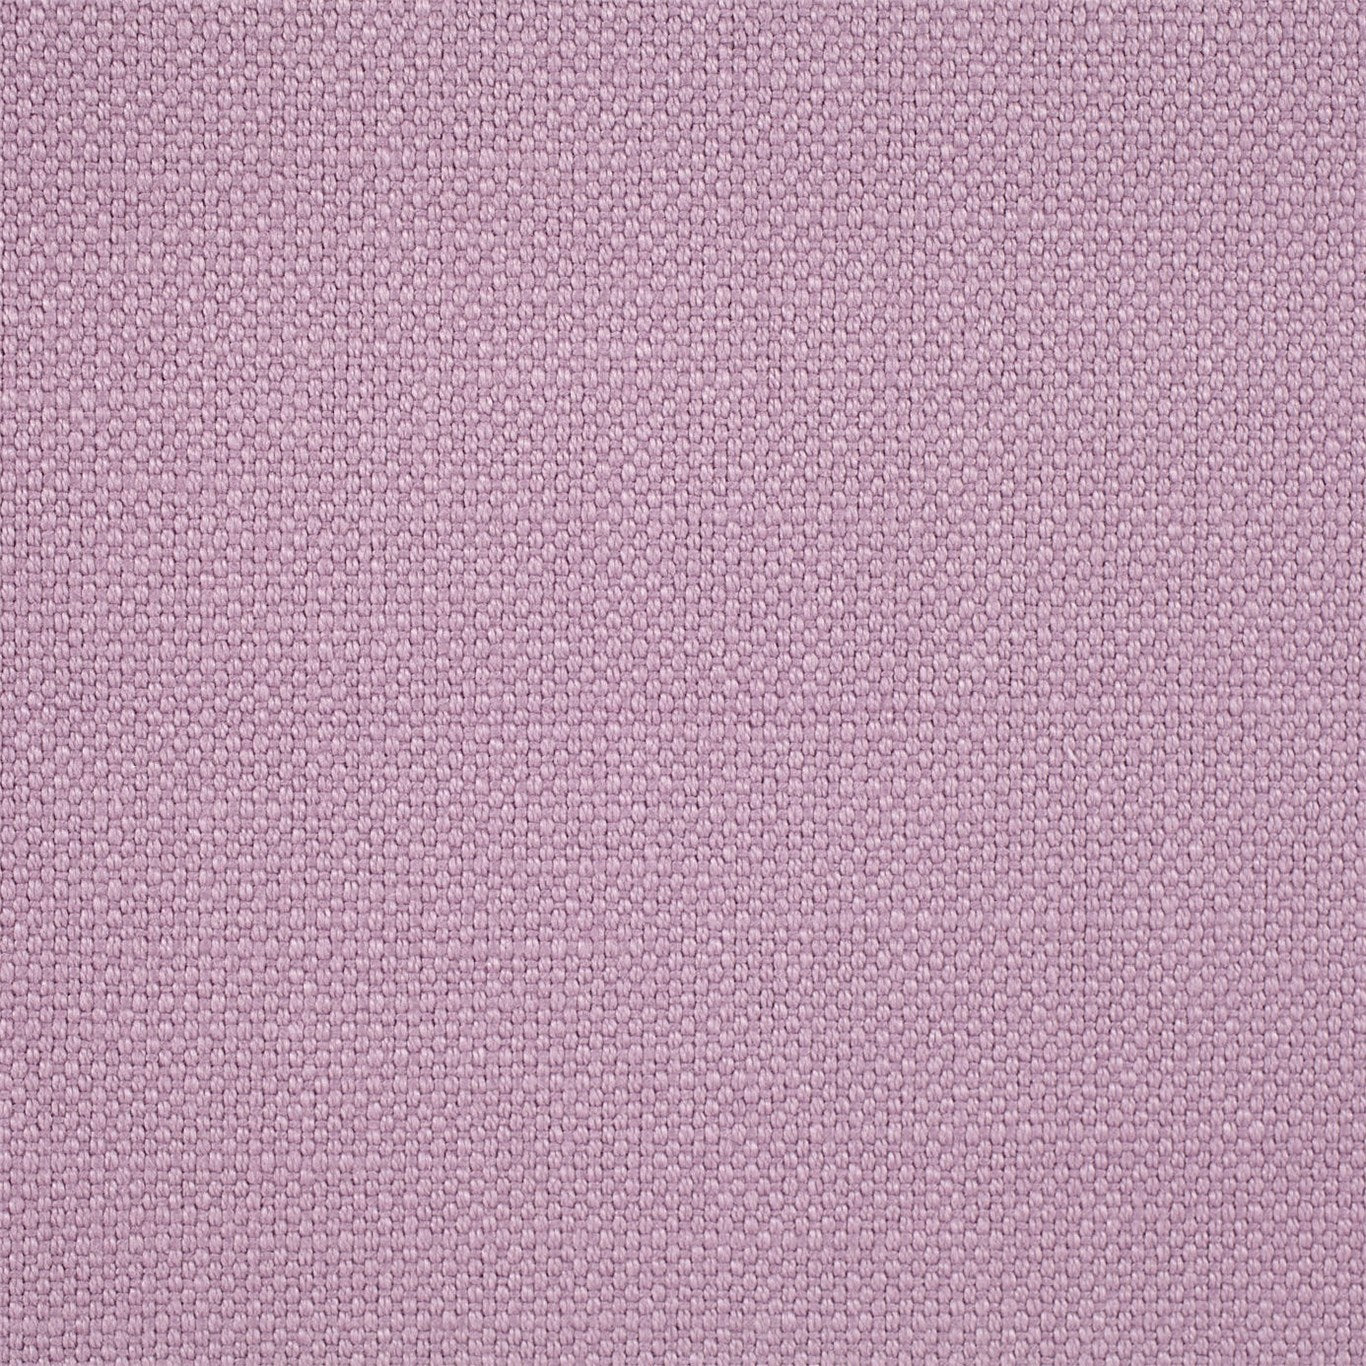 Arley Fabric by Sanderson - DALY245813 - Iris